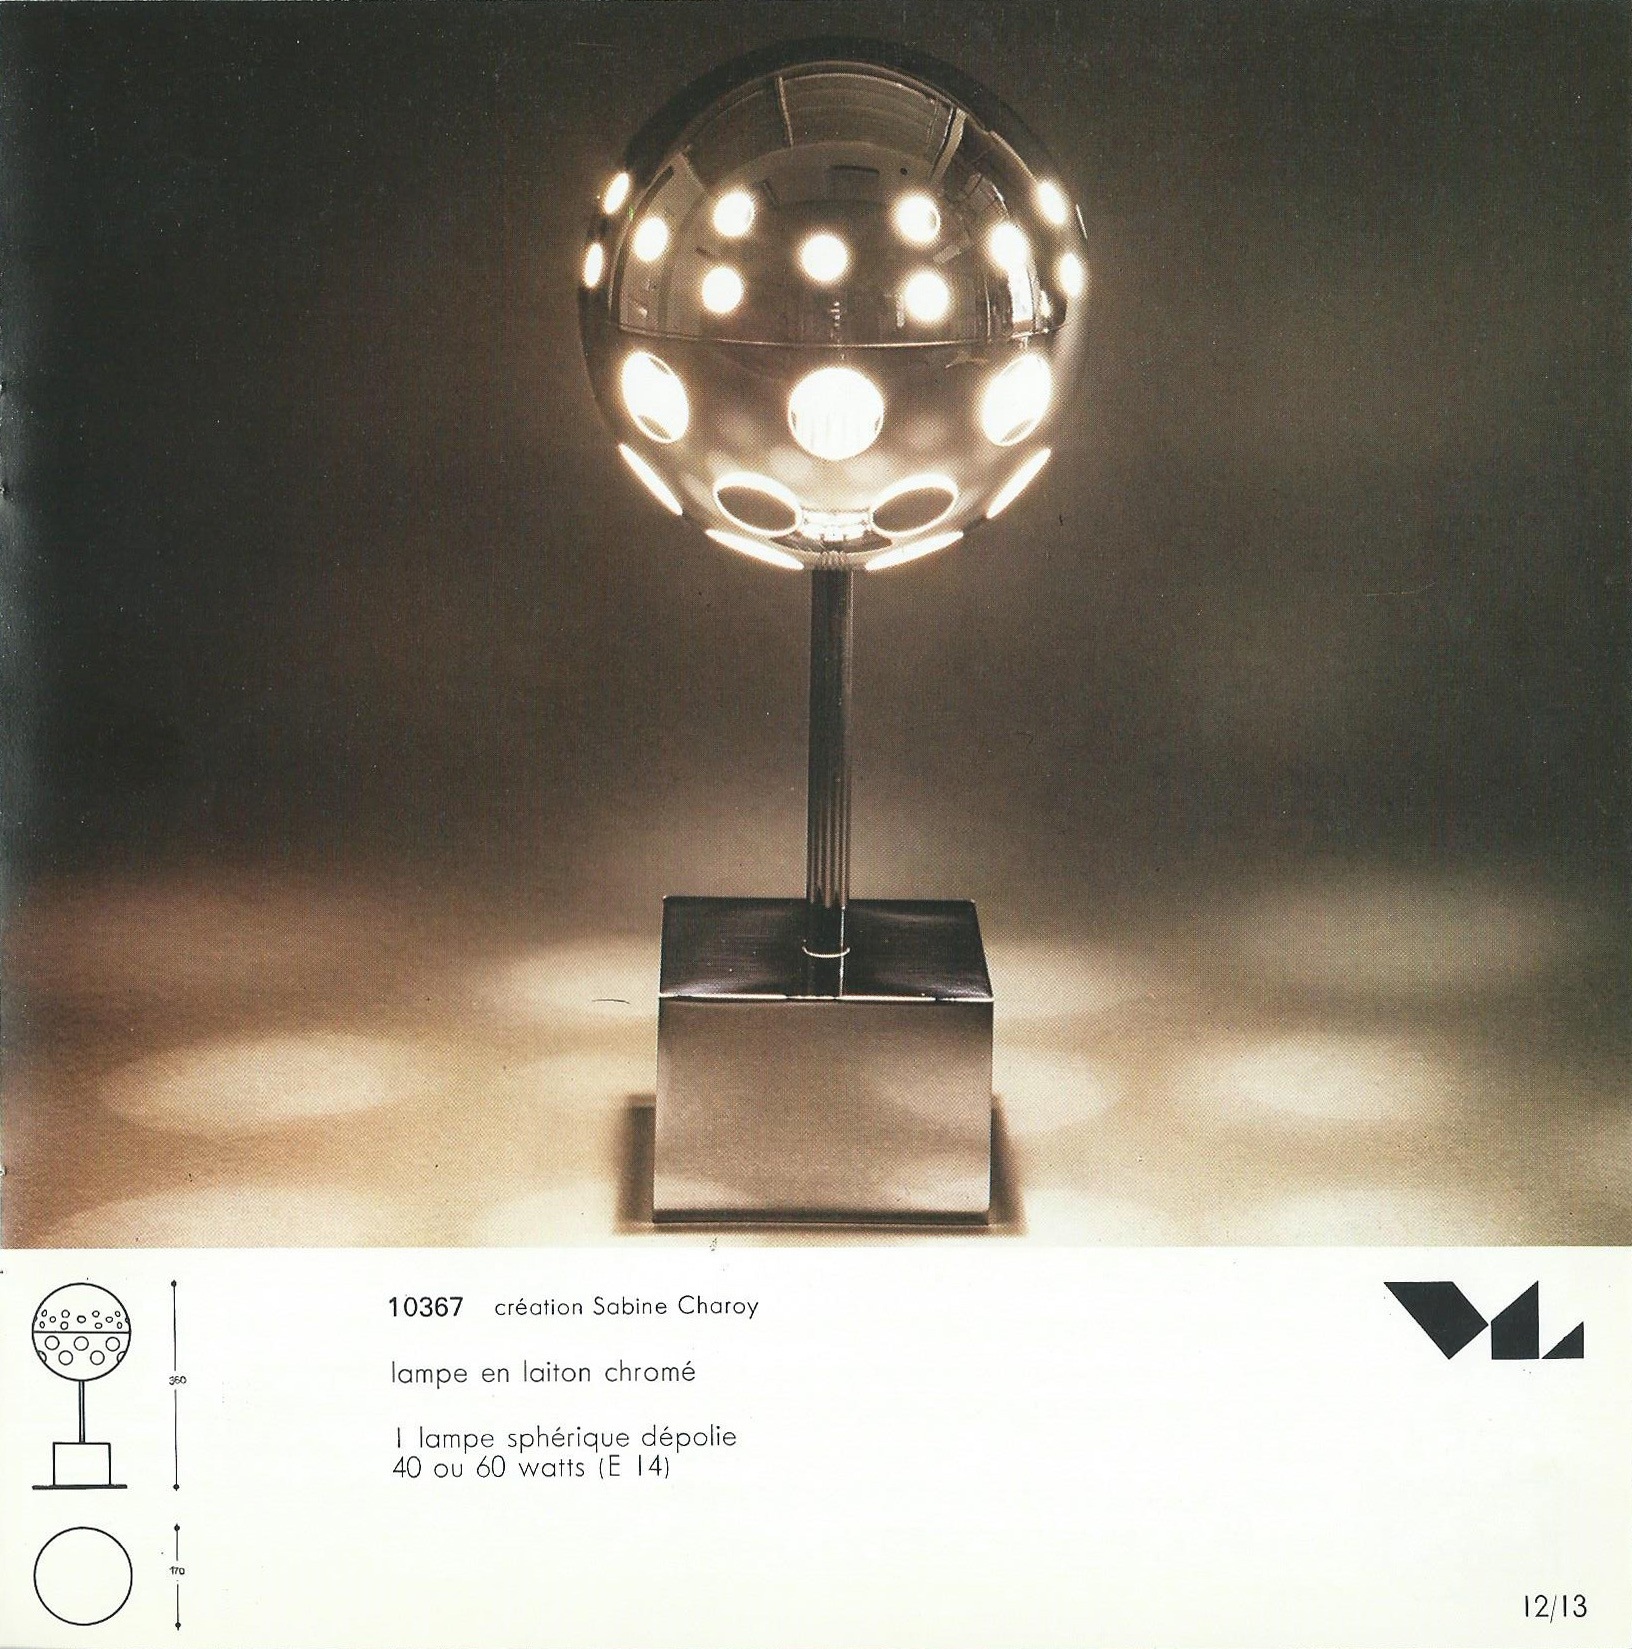 Verre Lumiere Catalogue, 1973